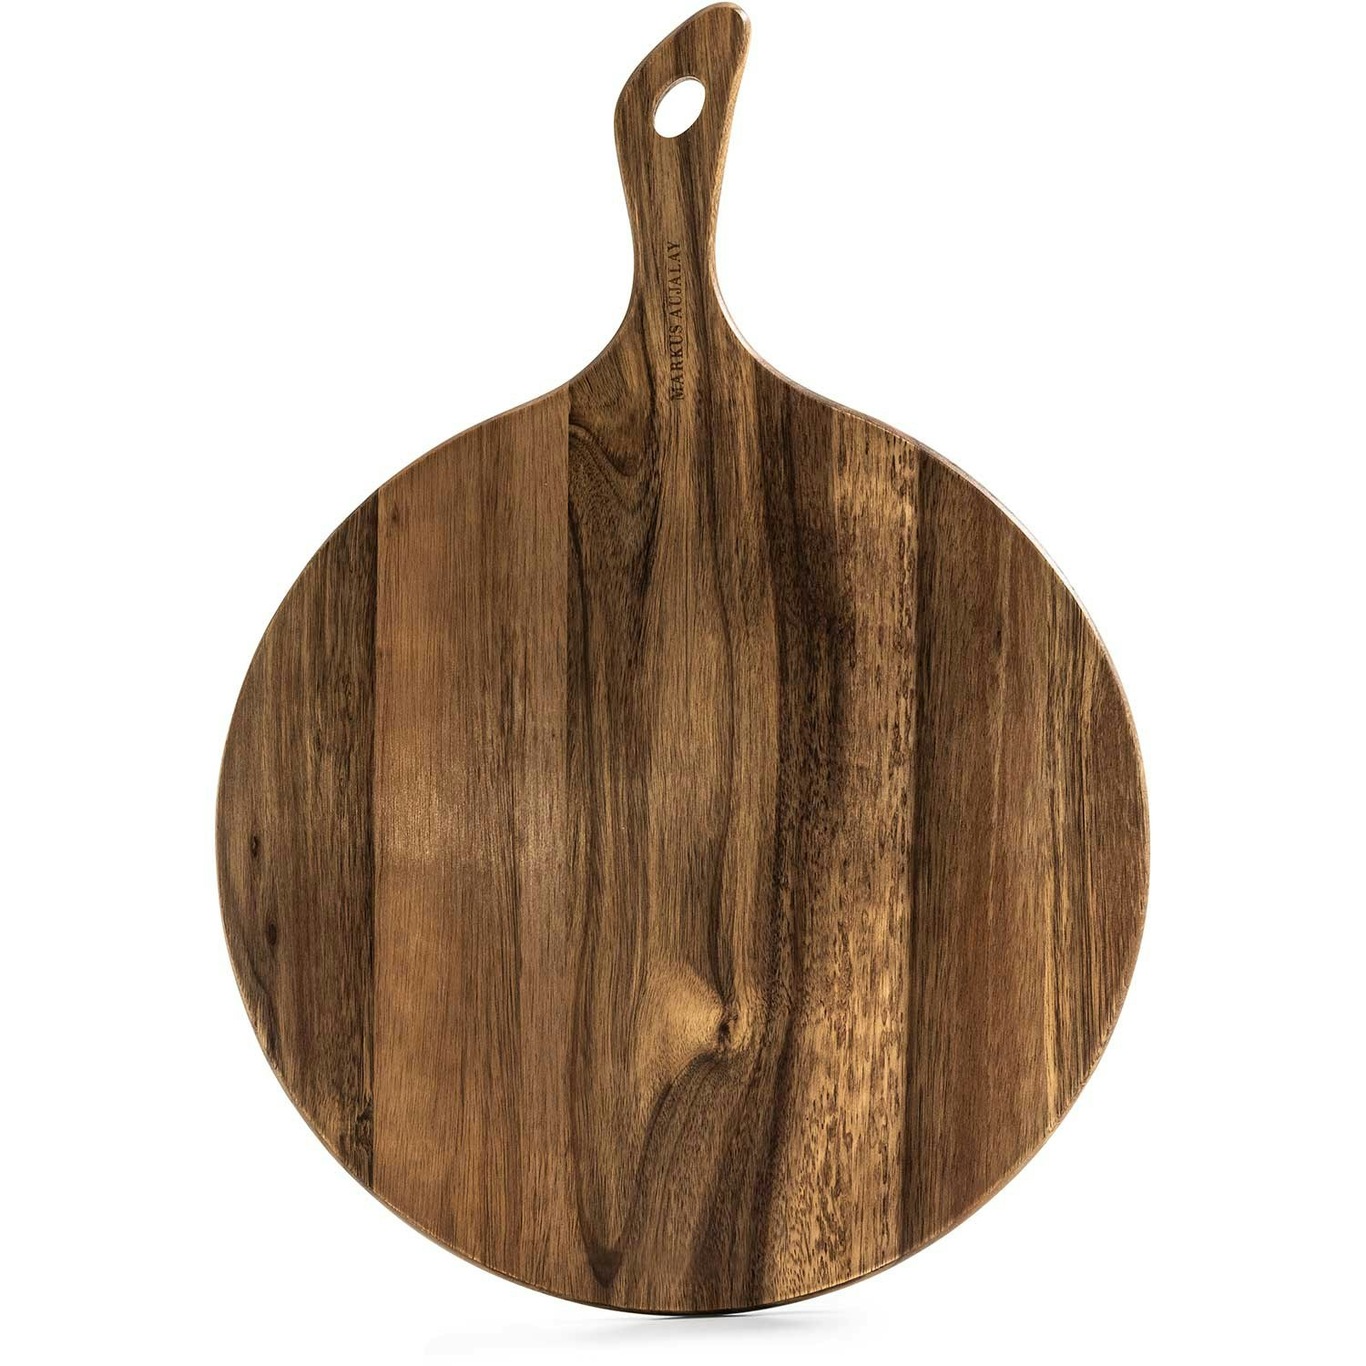 https://royaldesign.com/image/2/markus-aujalay-markus-cheese-board-with-cutlery-48x35x15-cm-acacia-wood-0?w=800&quality=80